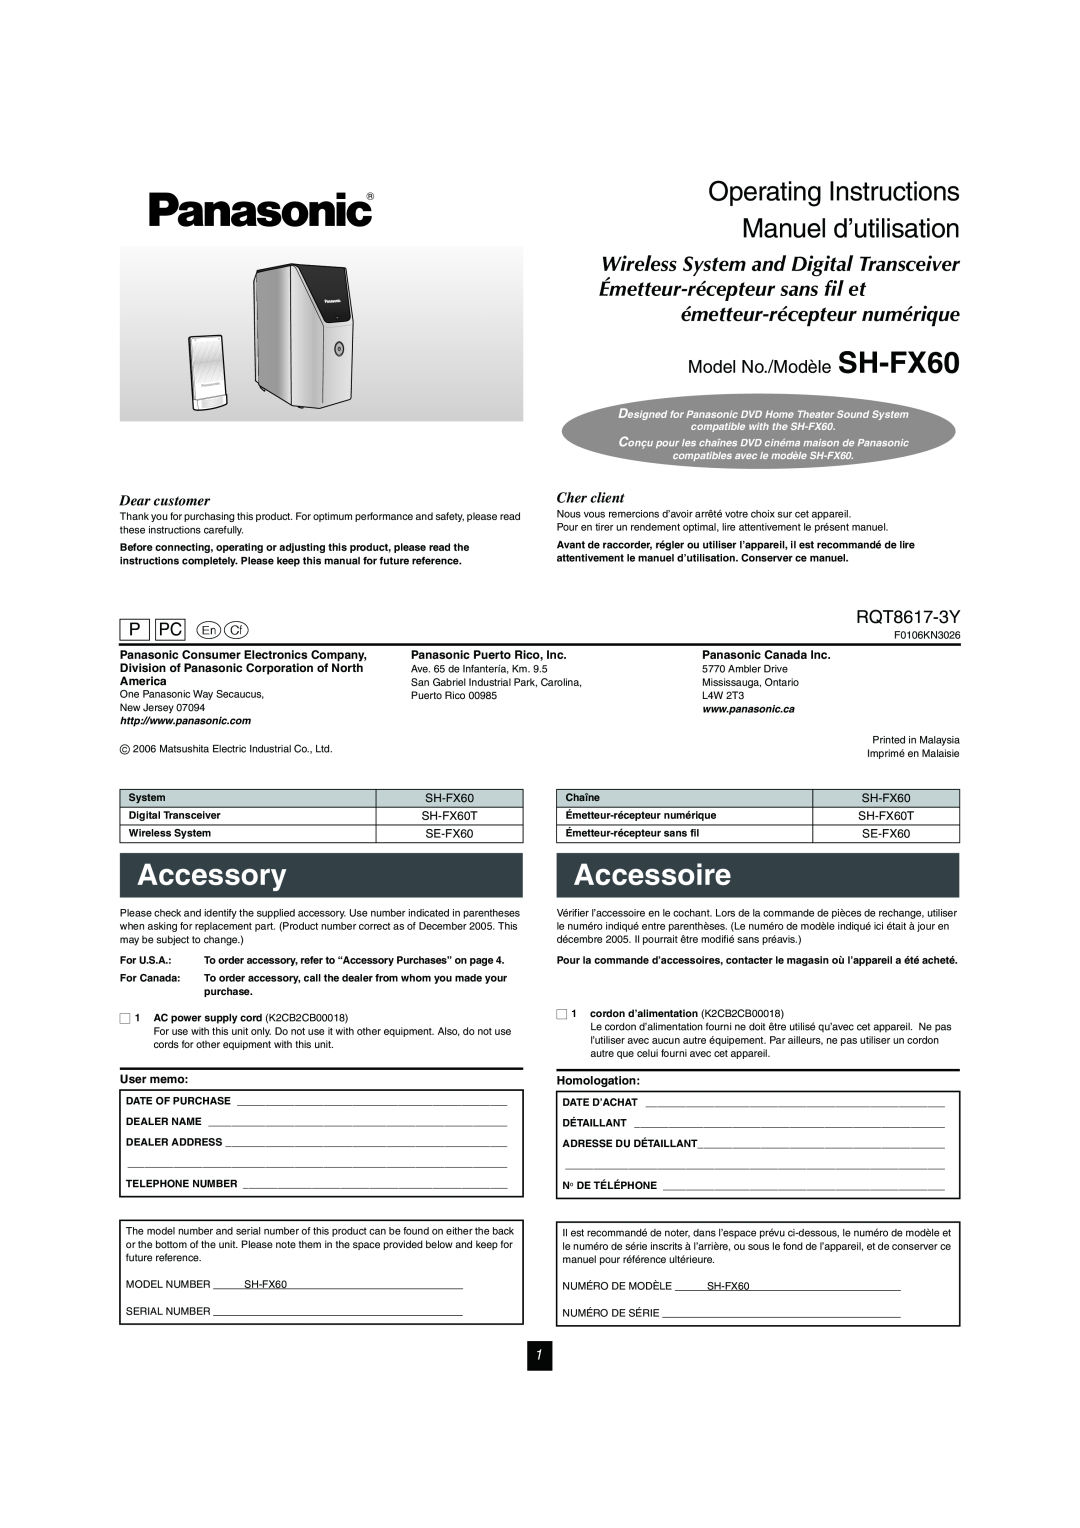 Panasonic SH-FX60 operating instructions Accessory, Accessoire, Operating Instructions Manuel d’utilisation, RQT8617-3Y 